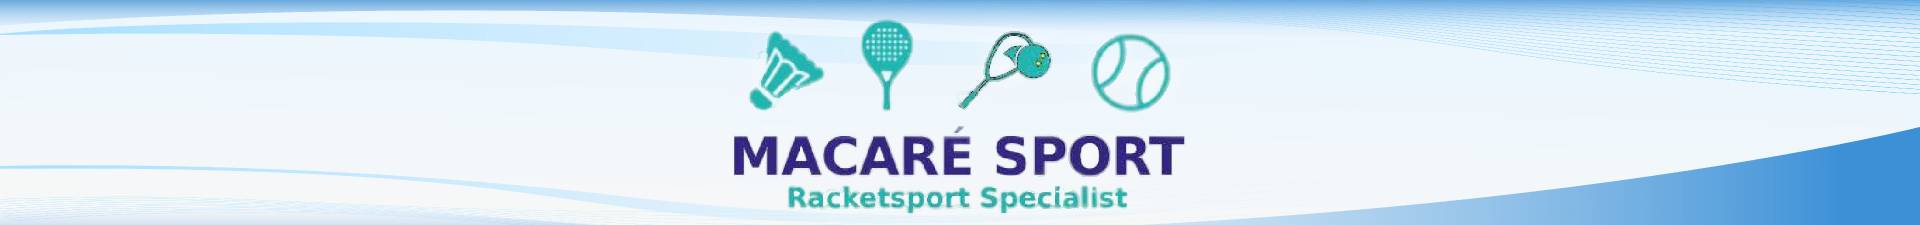 Macare Sport Badminton, Tennis, Squash en Padel Logo